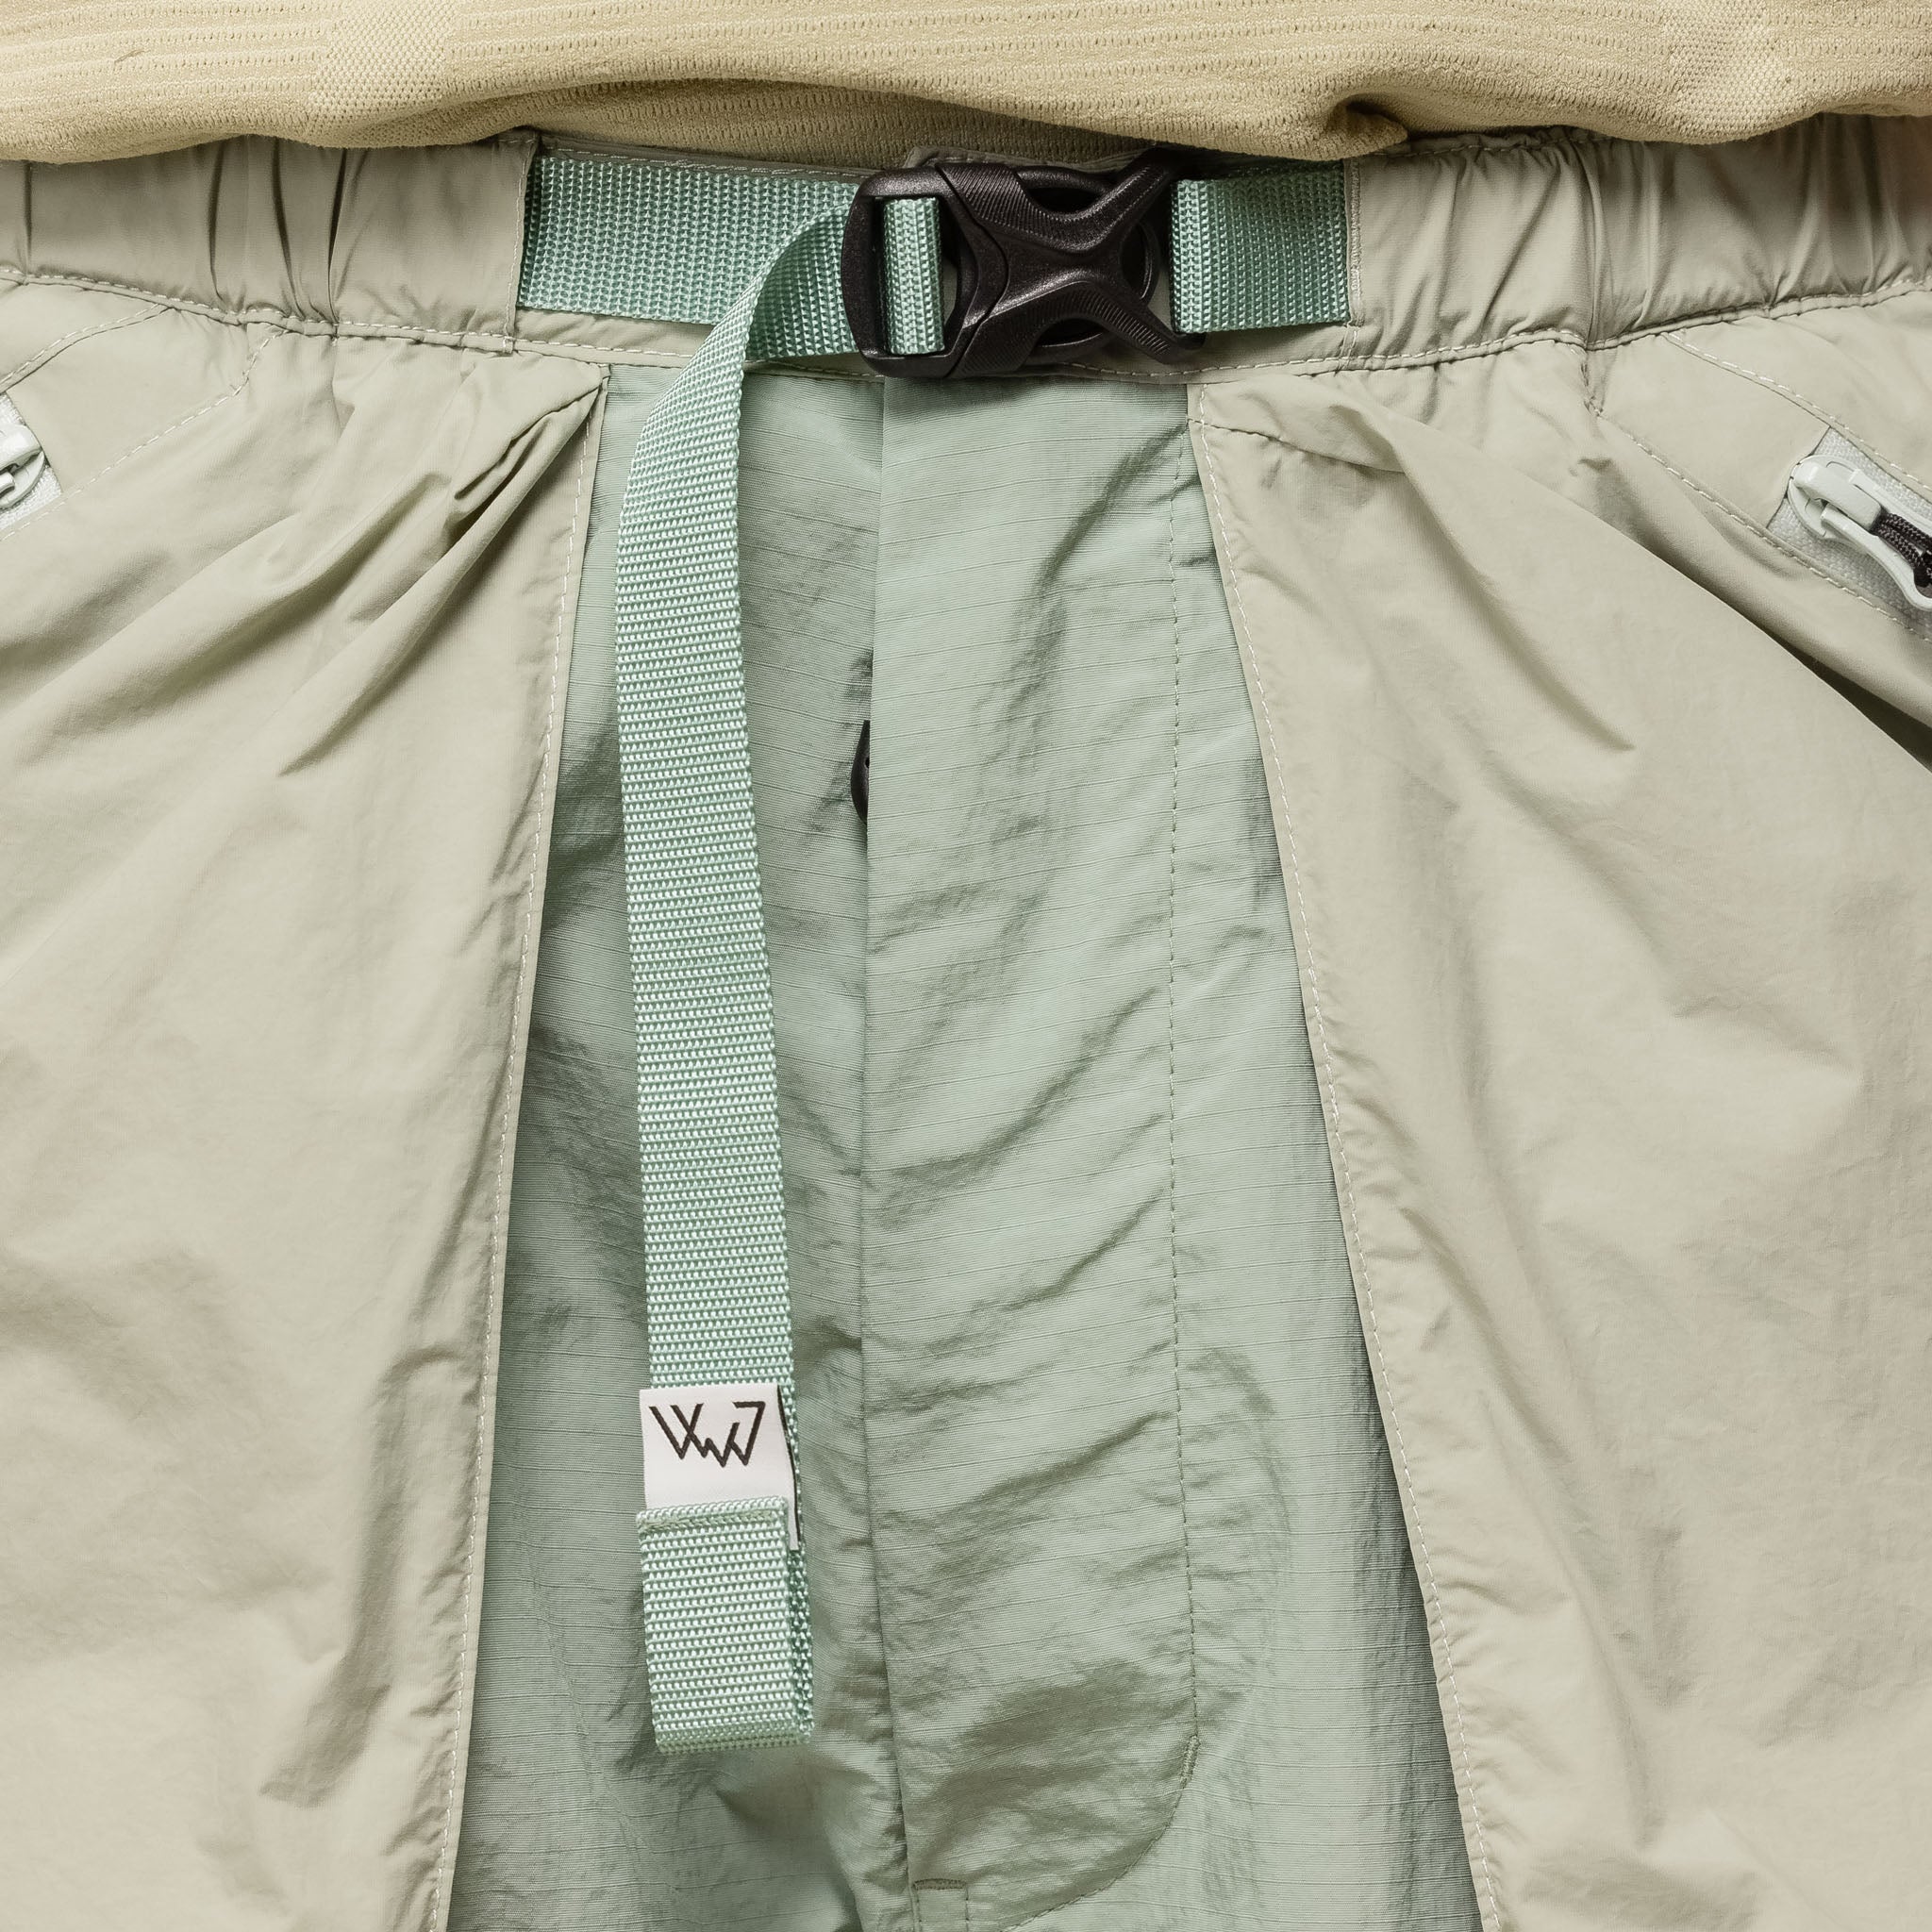 CMF Outdoor Garment - Kiltic Shorts Shorts - Light Khaki